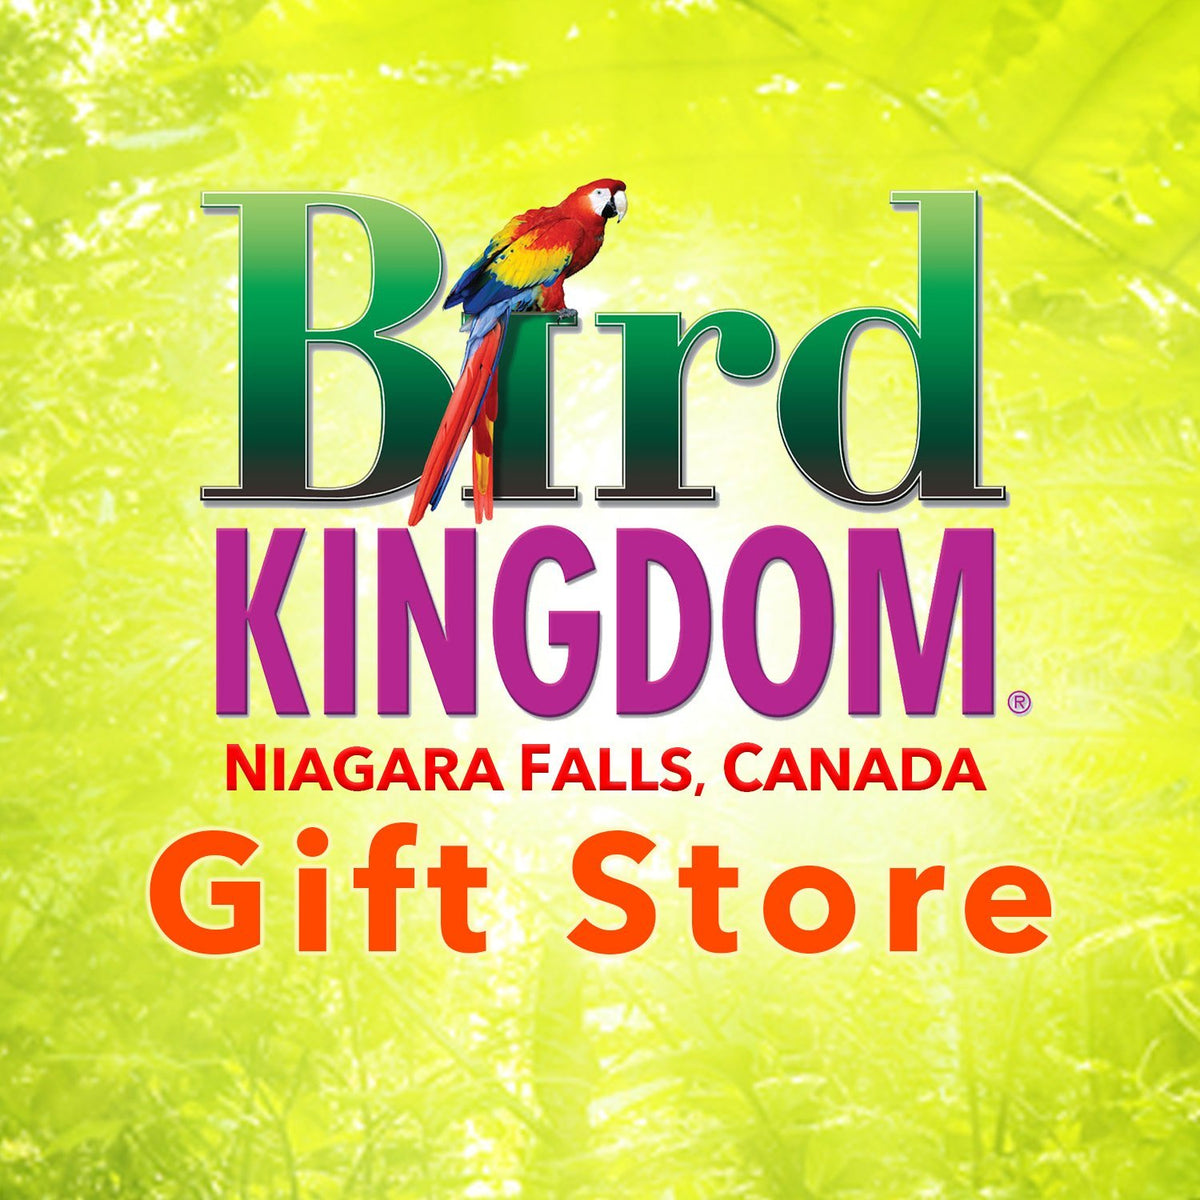 Bird Kingdom Giftstore